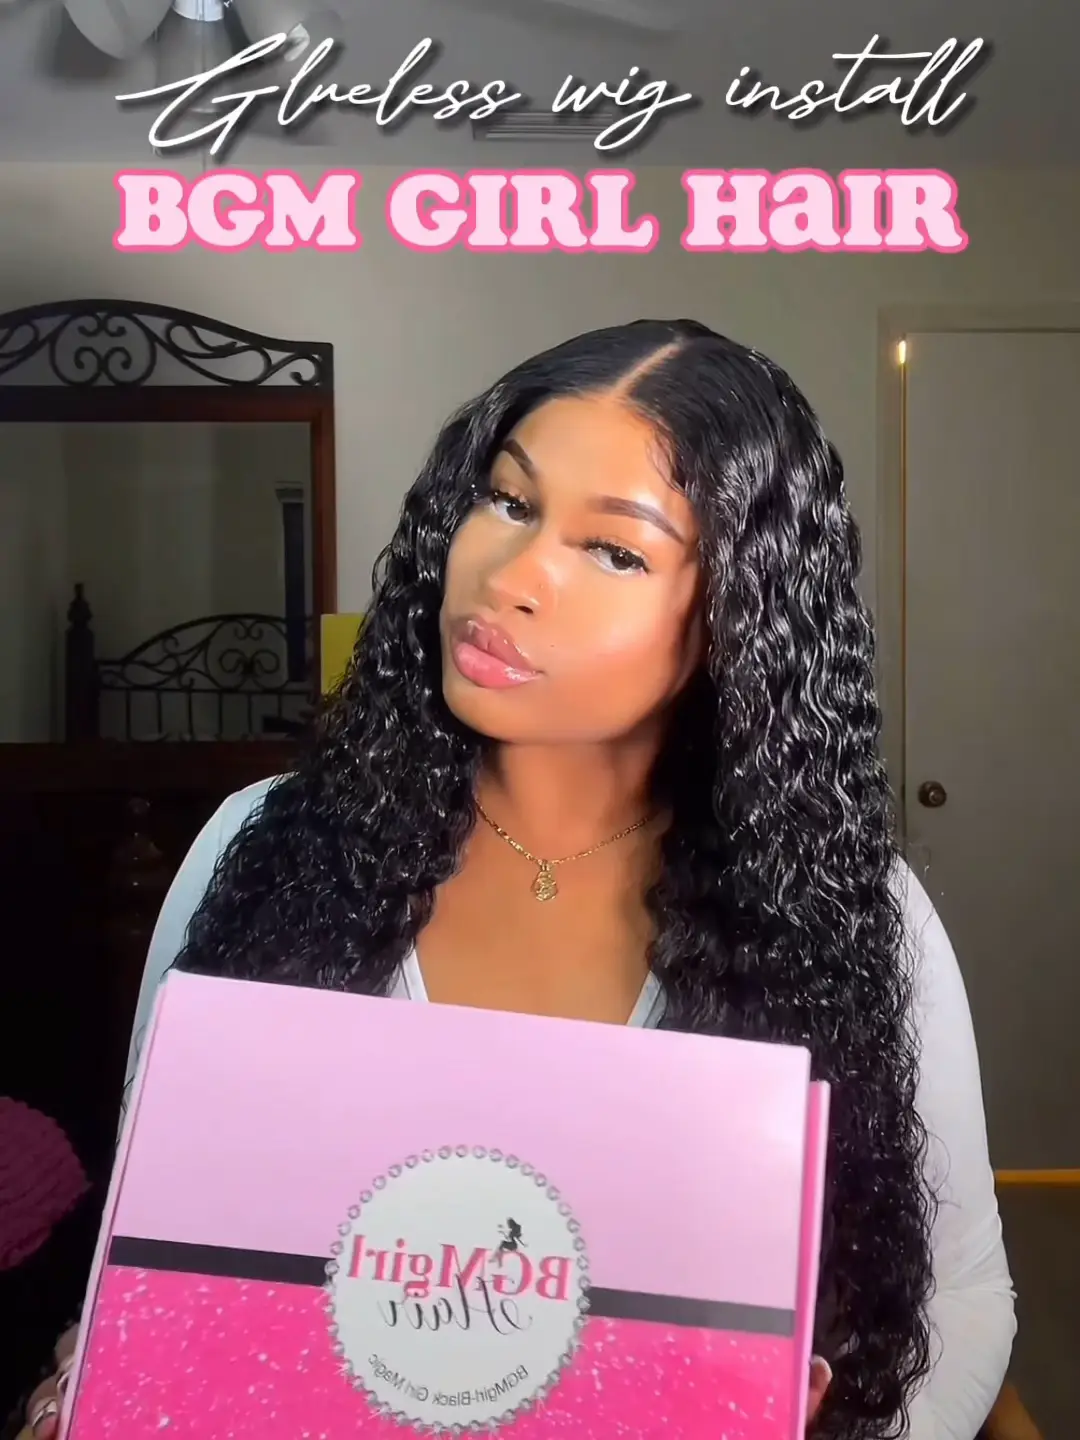 Cheap Wigs Sale BGMgirl